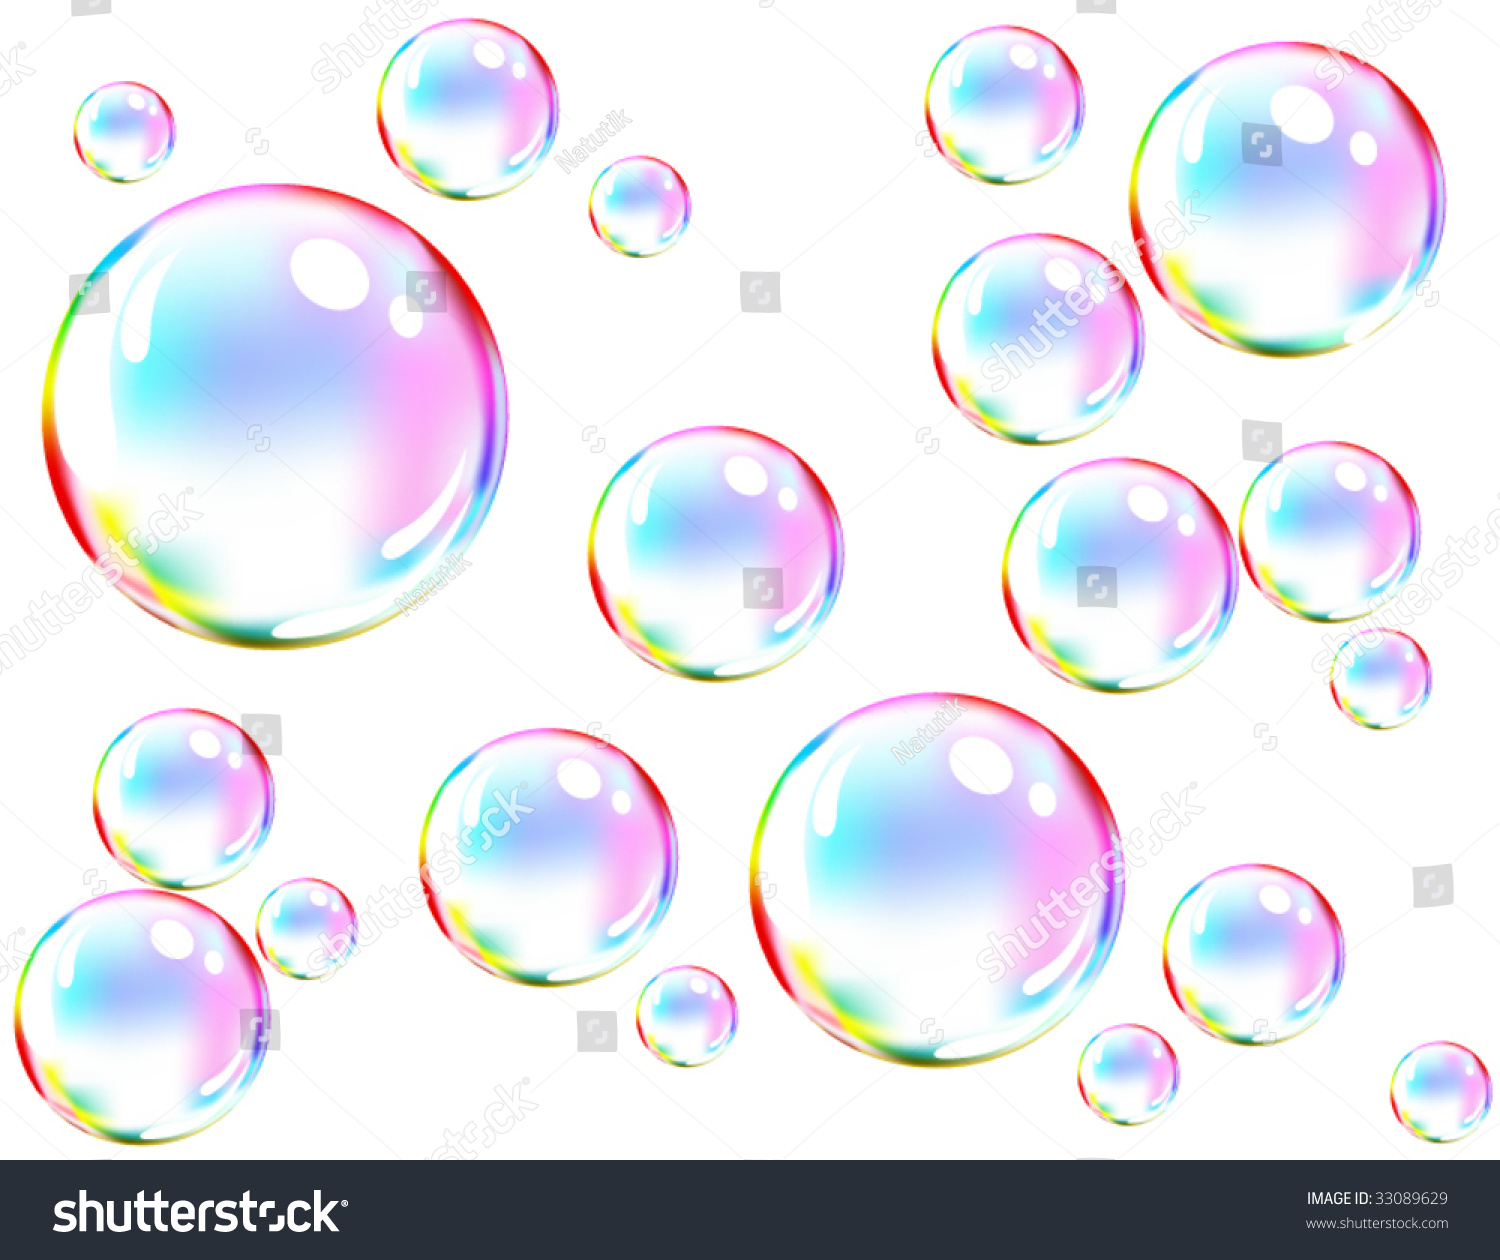 Download Vector Colored Soap Bubbles Stock Vector 33089629 ...